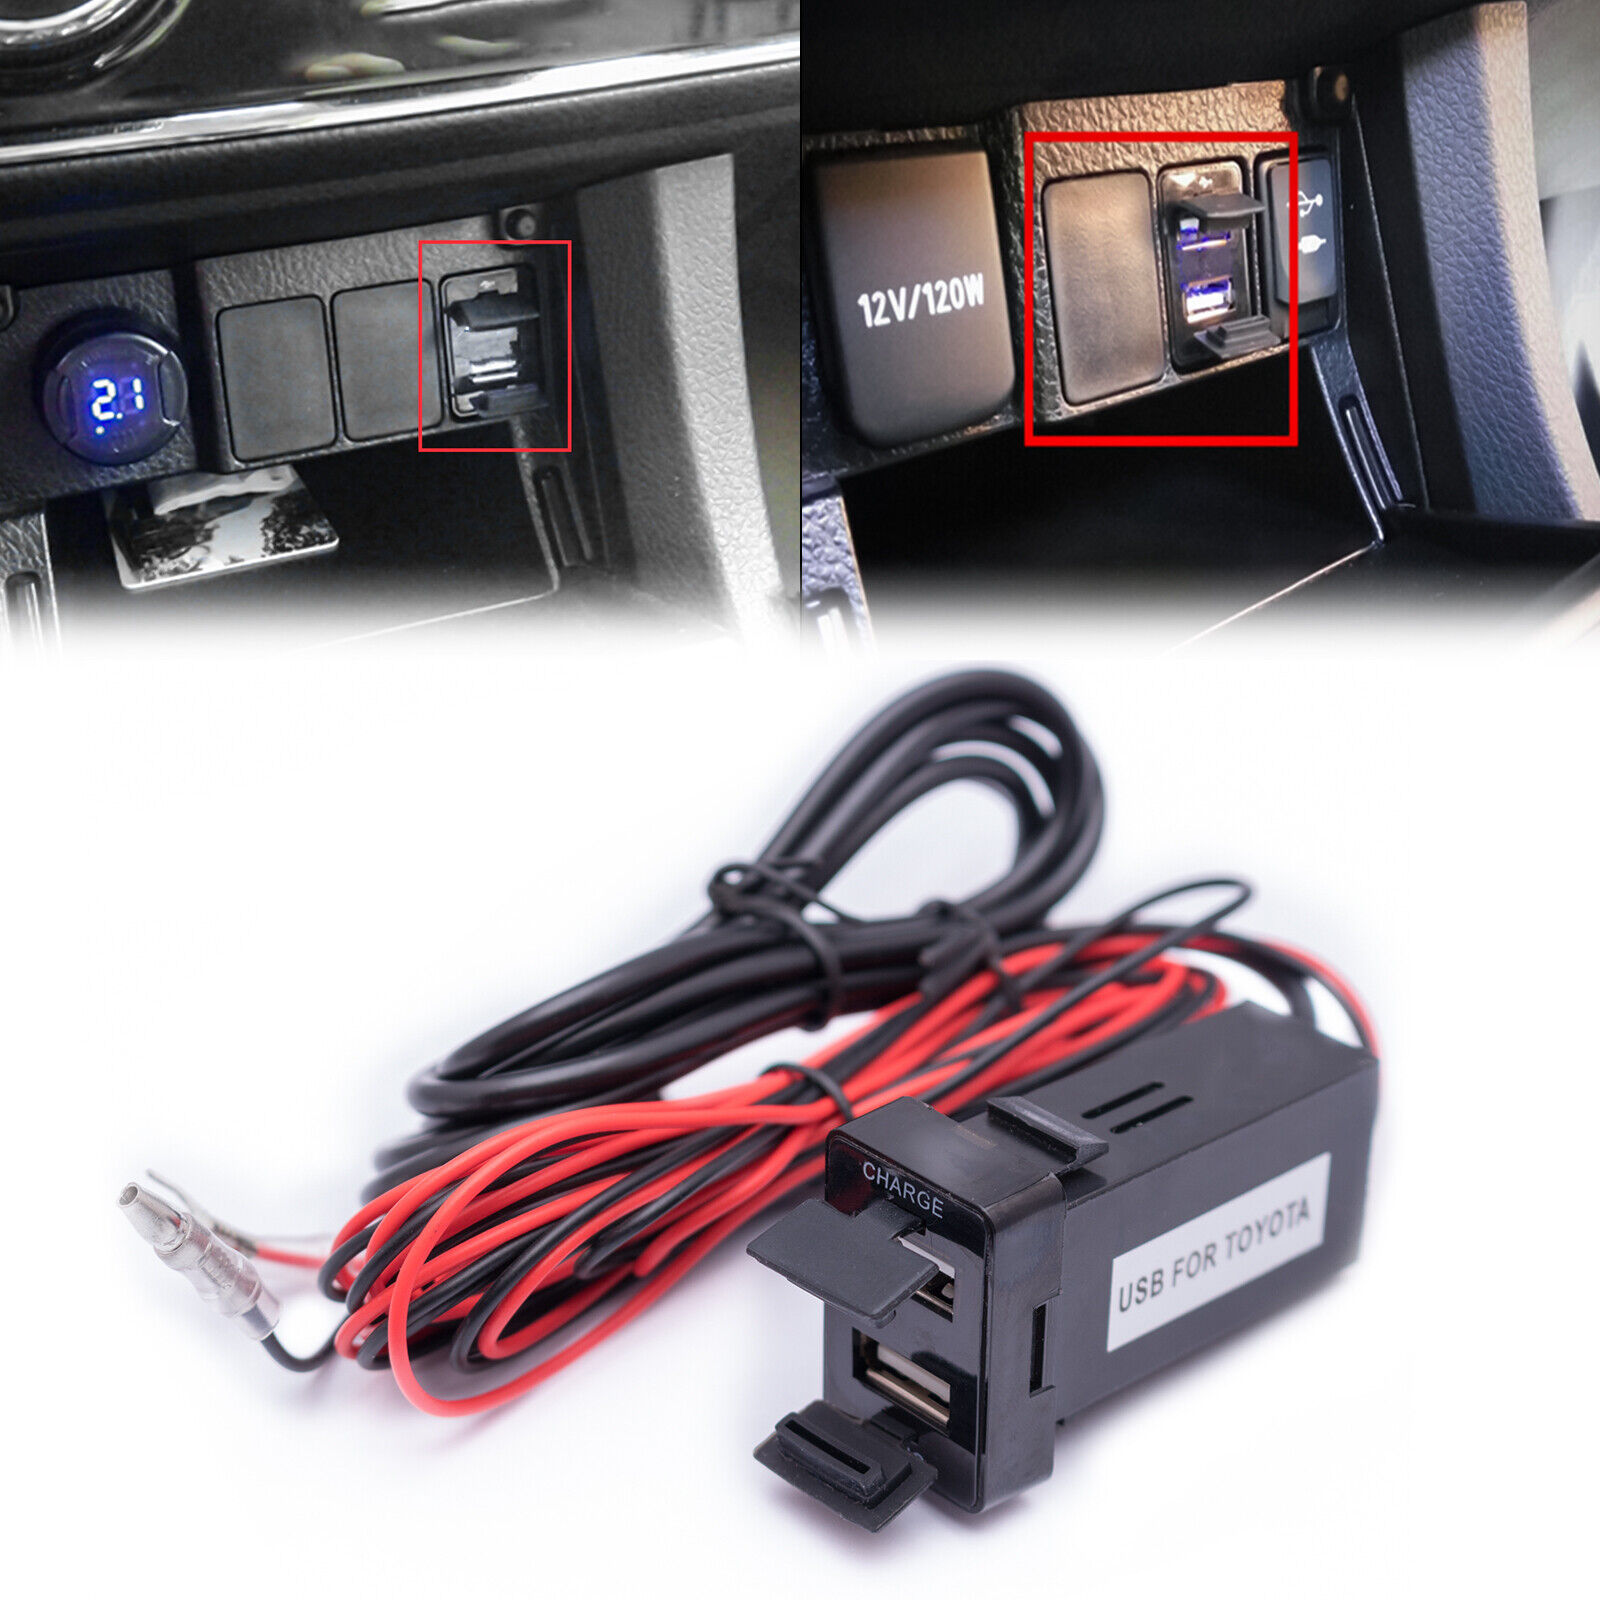 12V USB Port Charger/ Audio LED Indicator Adapter For Toyota Camry RAV4 Tundra